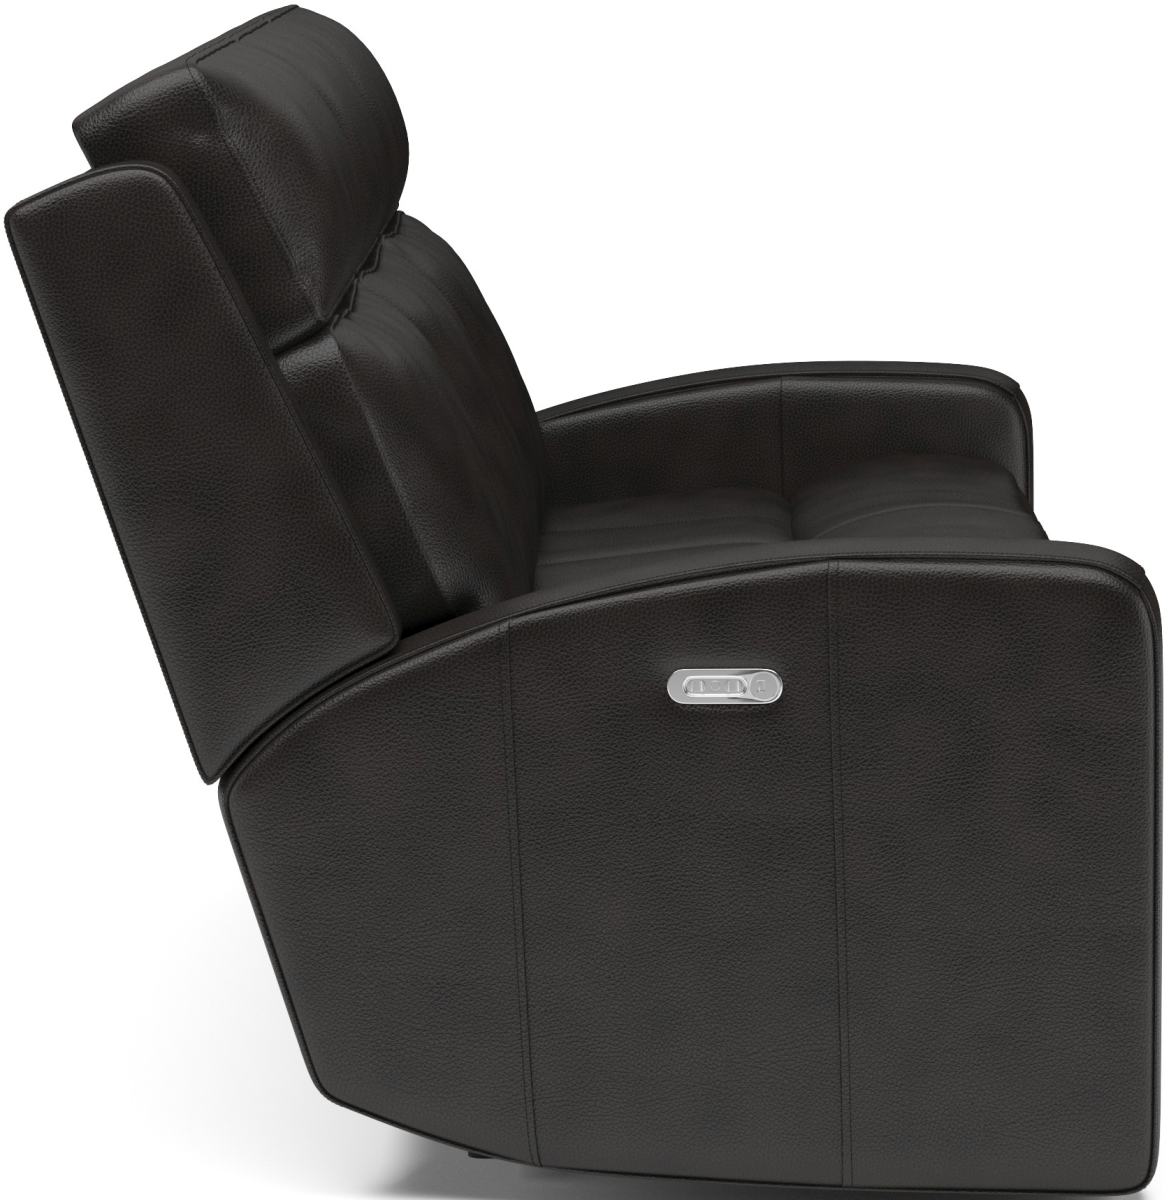 Flexsteel Cody Grey Leather Power Reclining Sofa with Power Headrest